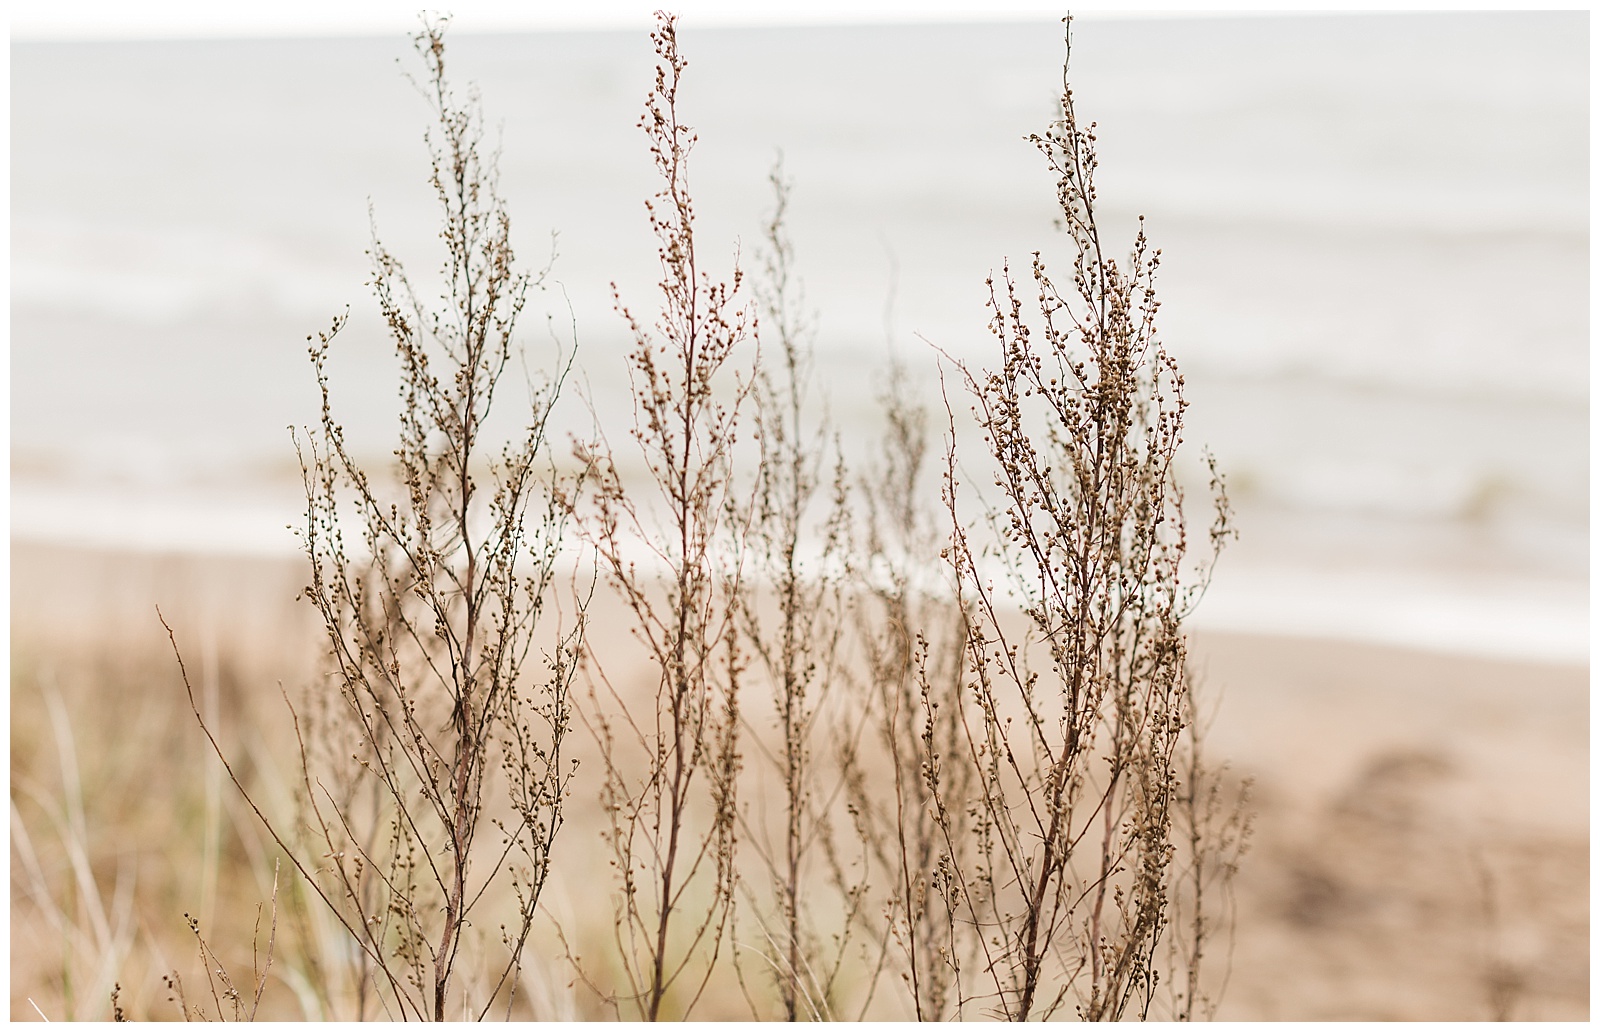 Plants on beach in Traverse City, Michigan.